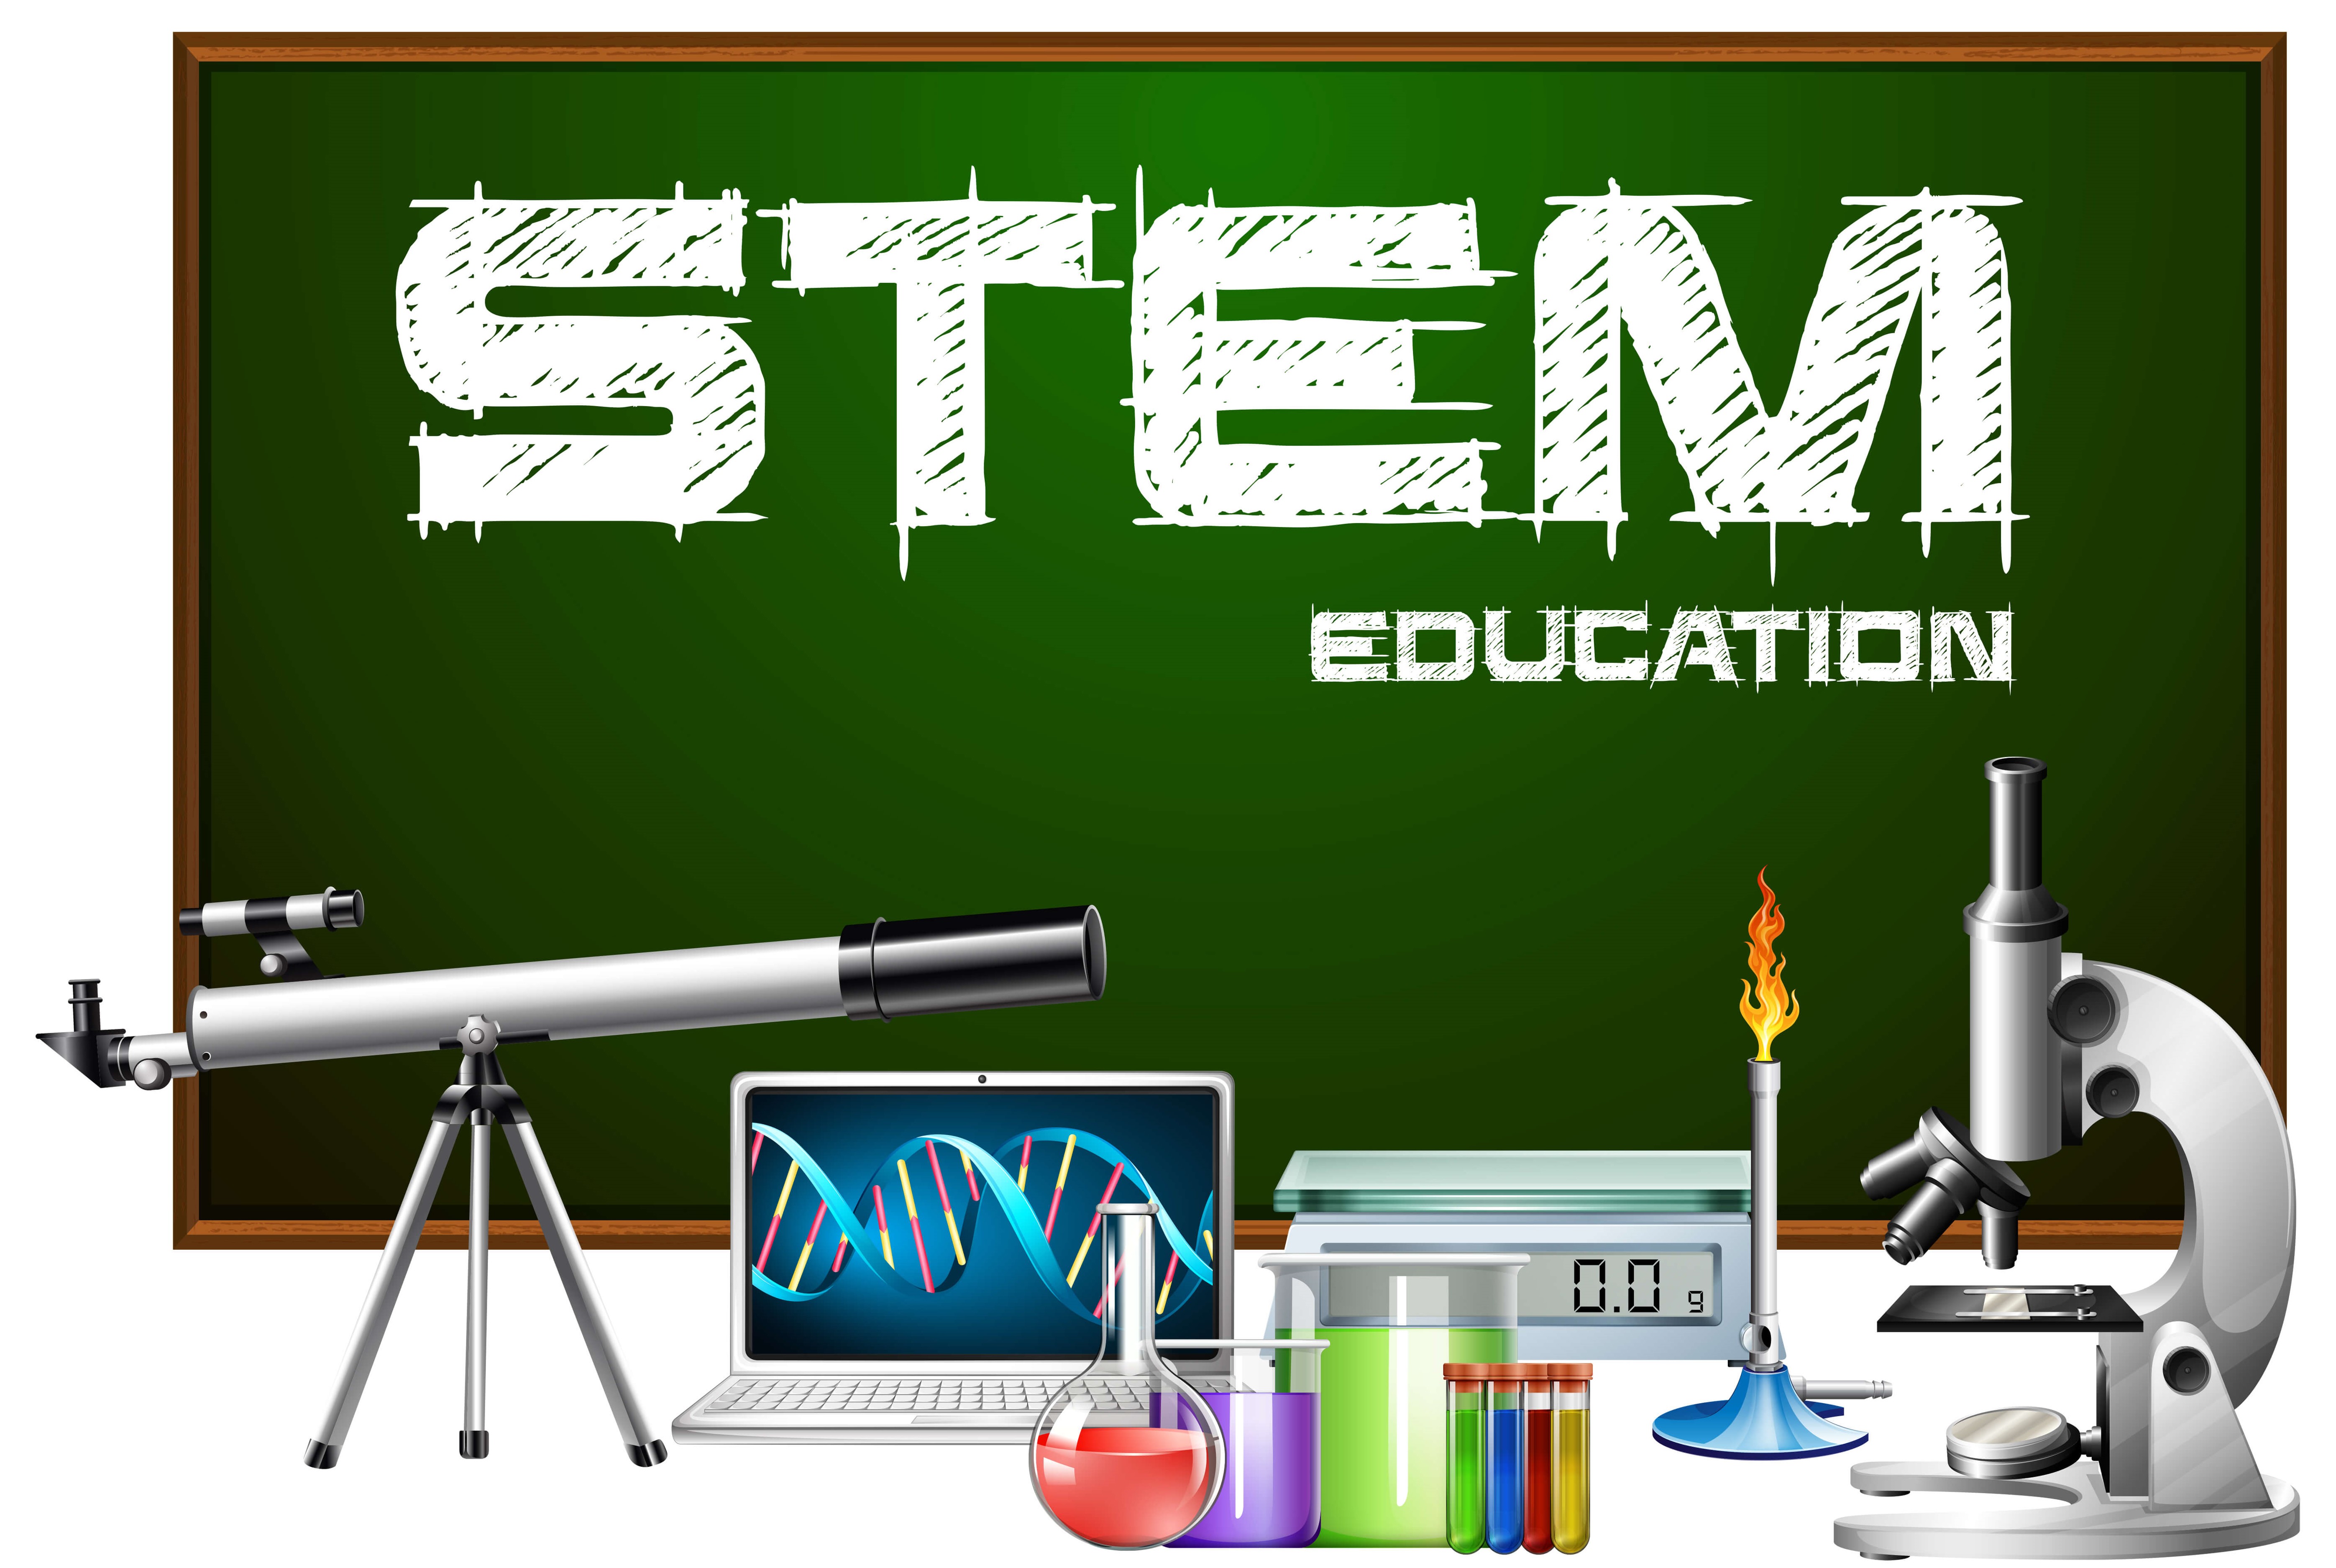 A representation of educational tools and gadgets